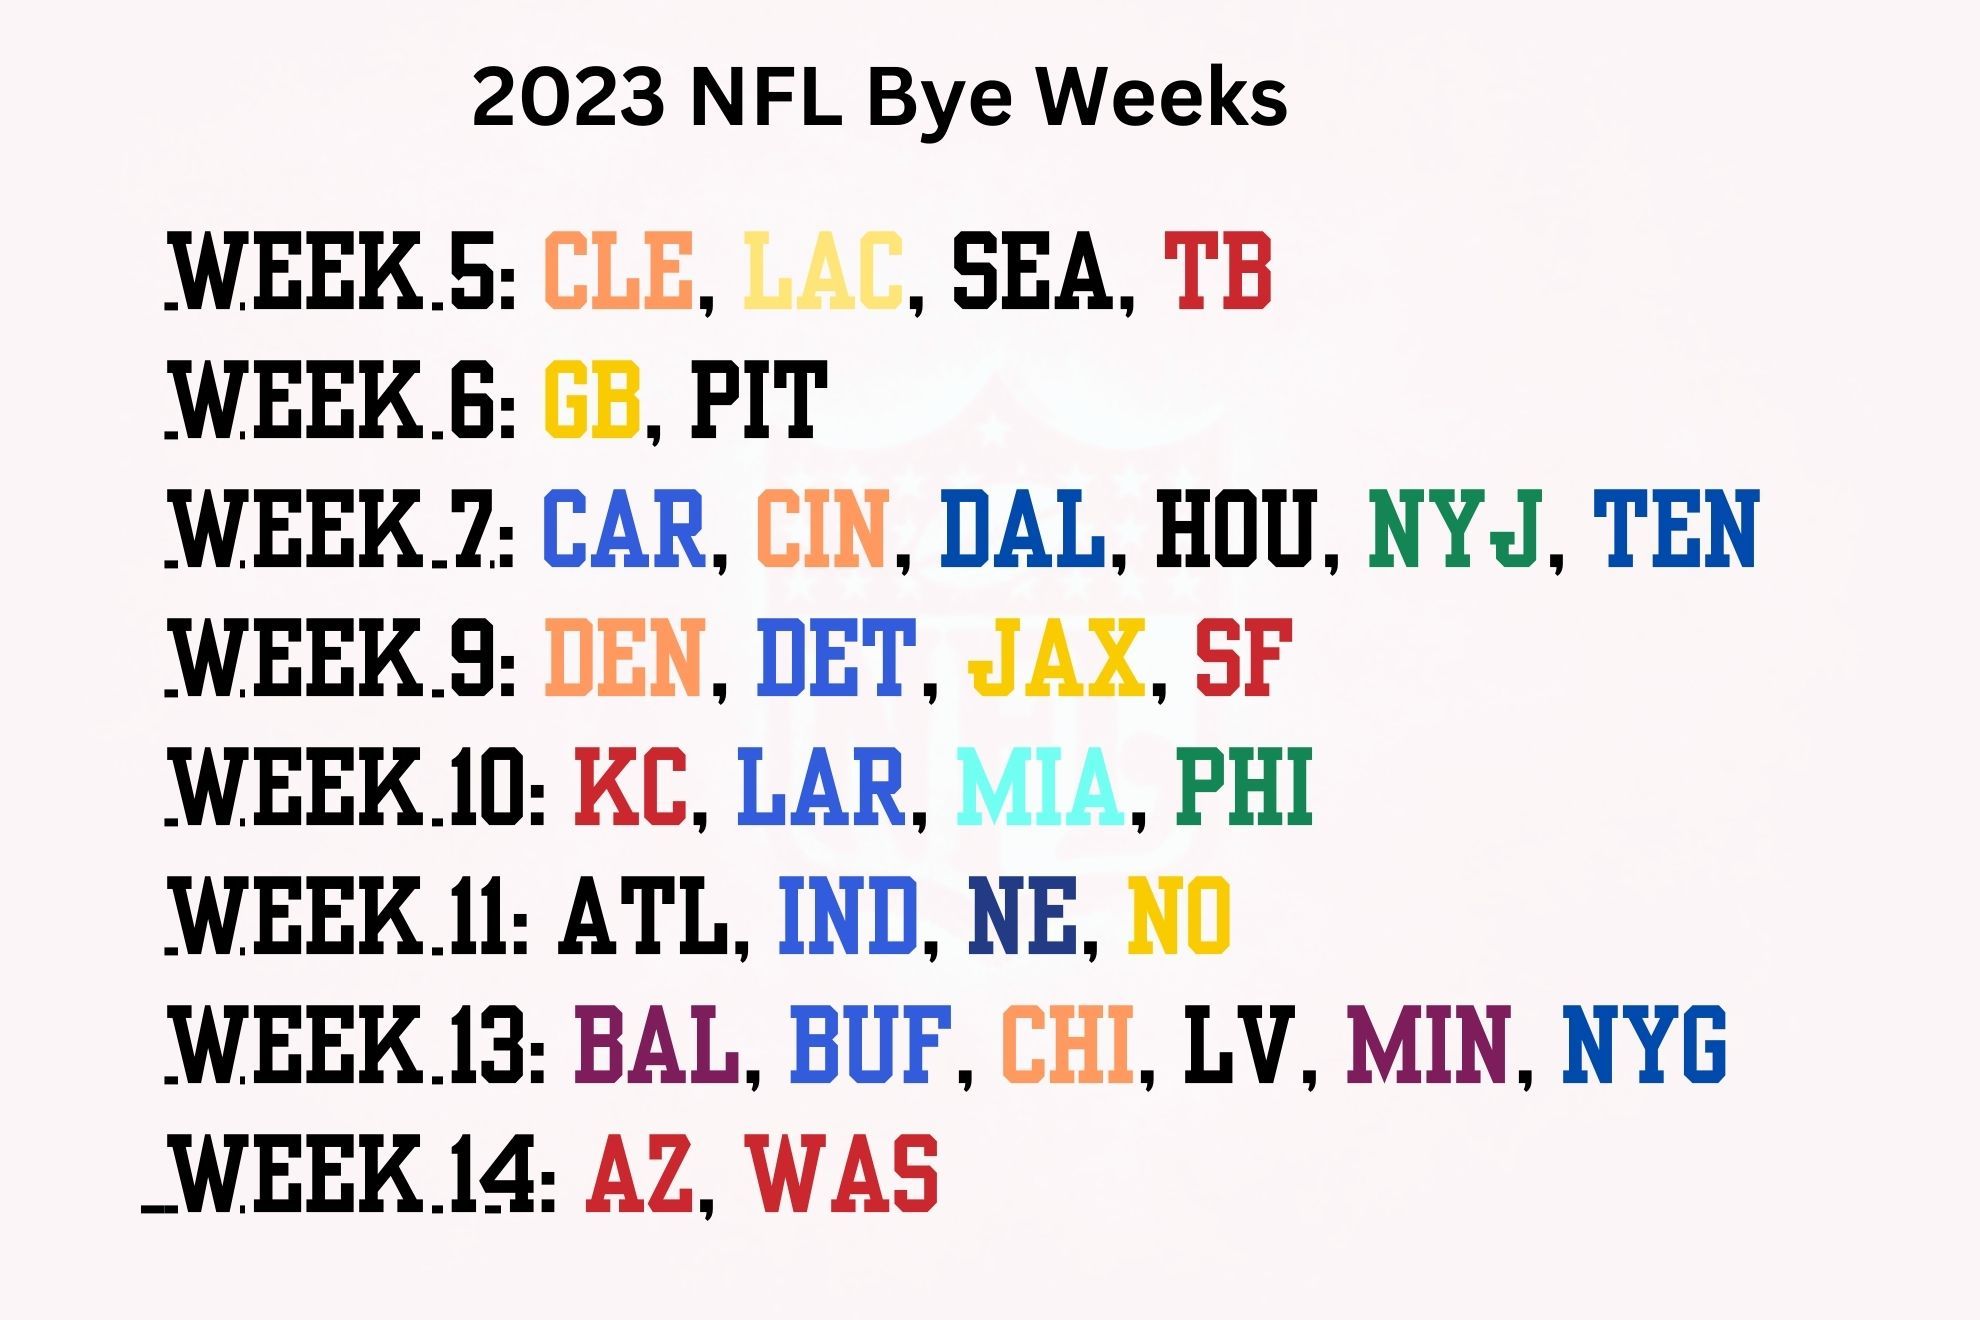 NFL Fantasy Football Draft 2023: Bye Weeks for all 32 teams